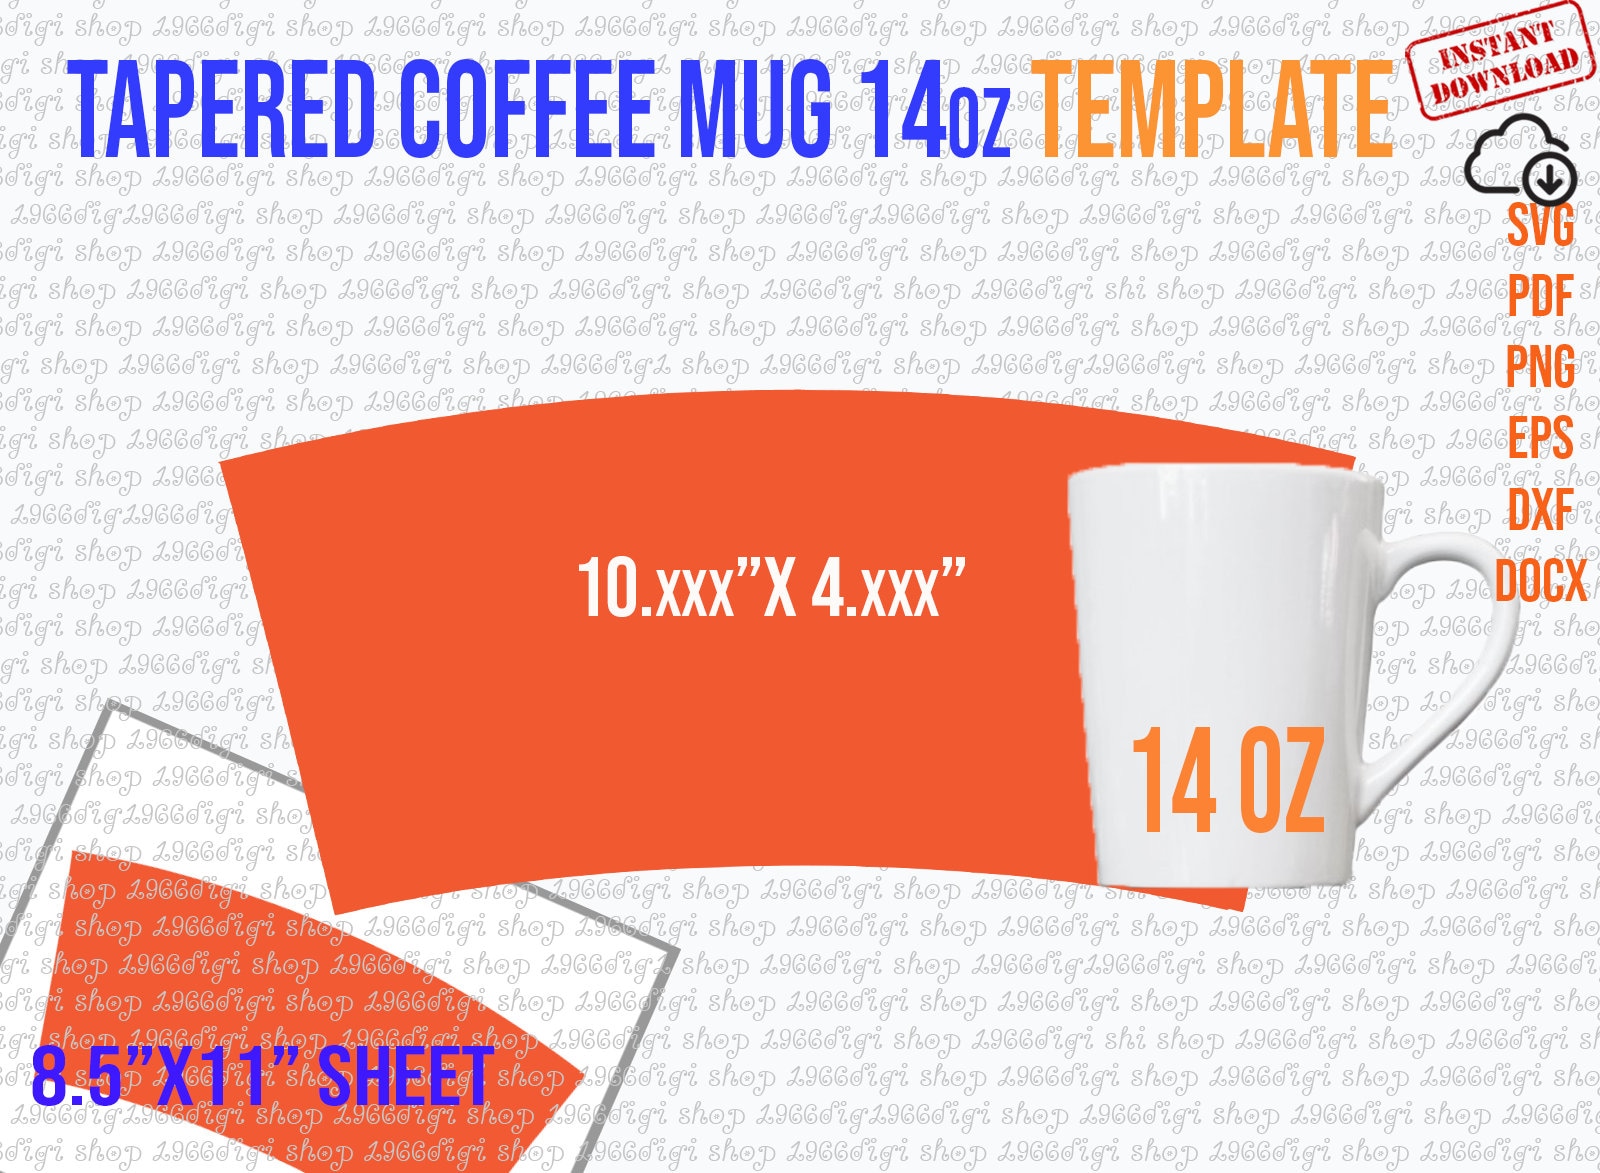 Mug Template Design 11 15 Oz Wrap Bundle Graphic by Katine Design ·  Creative Fabrica